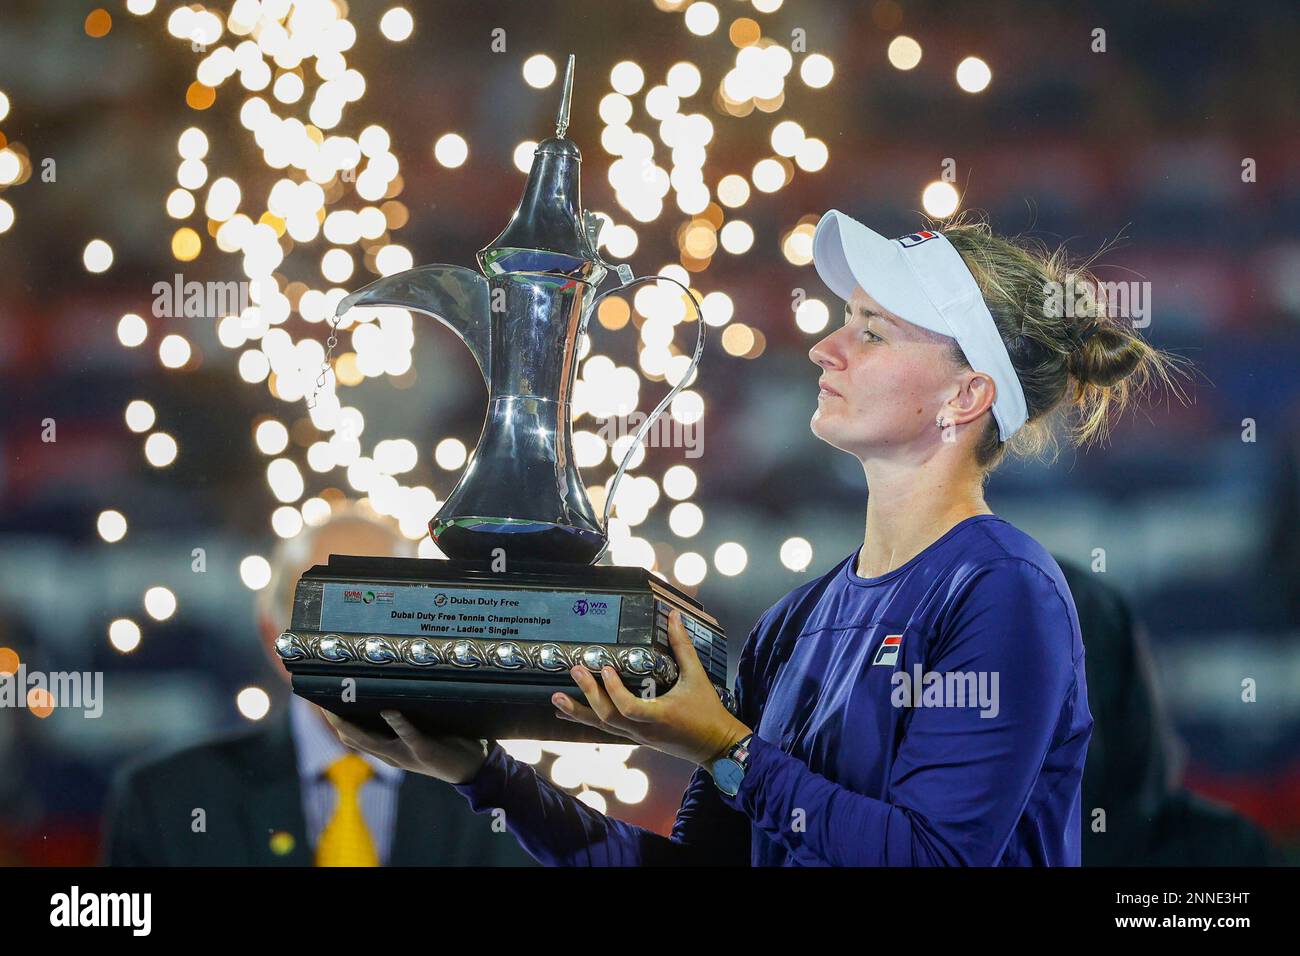 Champions Reel: How Barbora Krejcikova won Dubai 2023